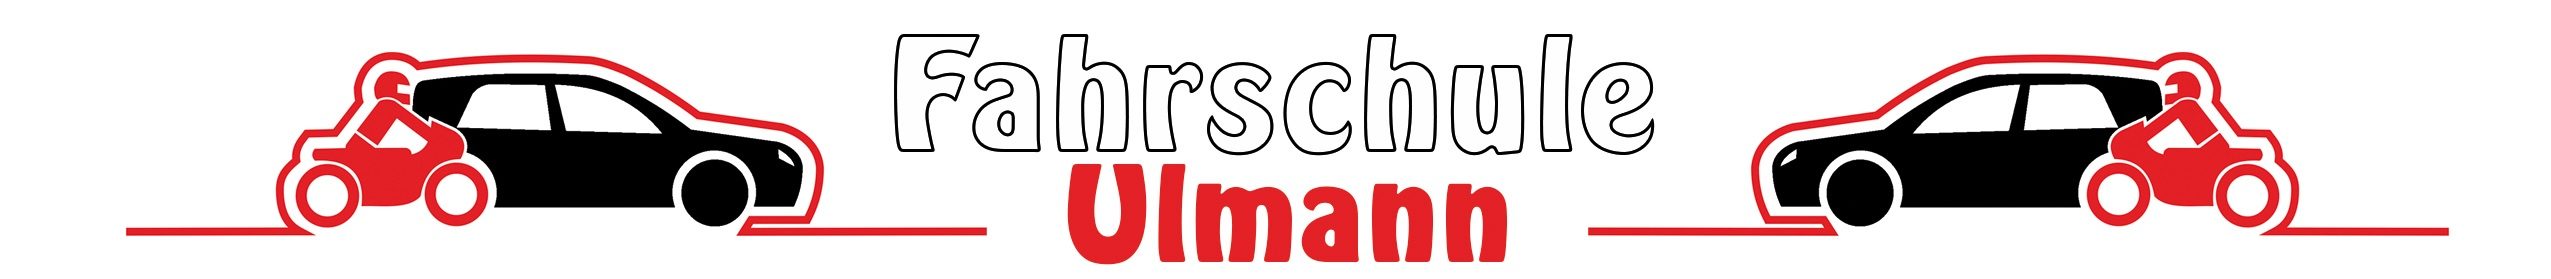 Logo for Fahrschule - Ulmann